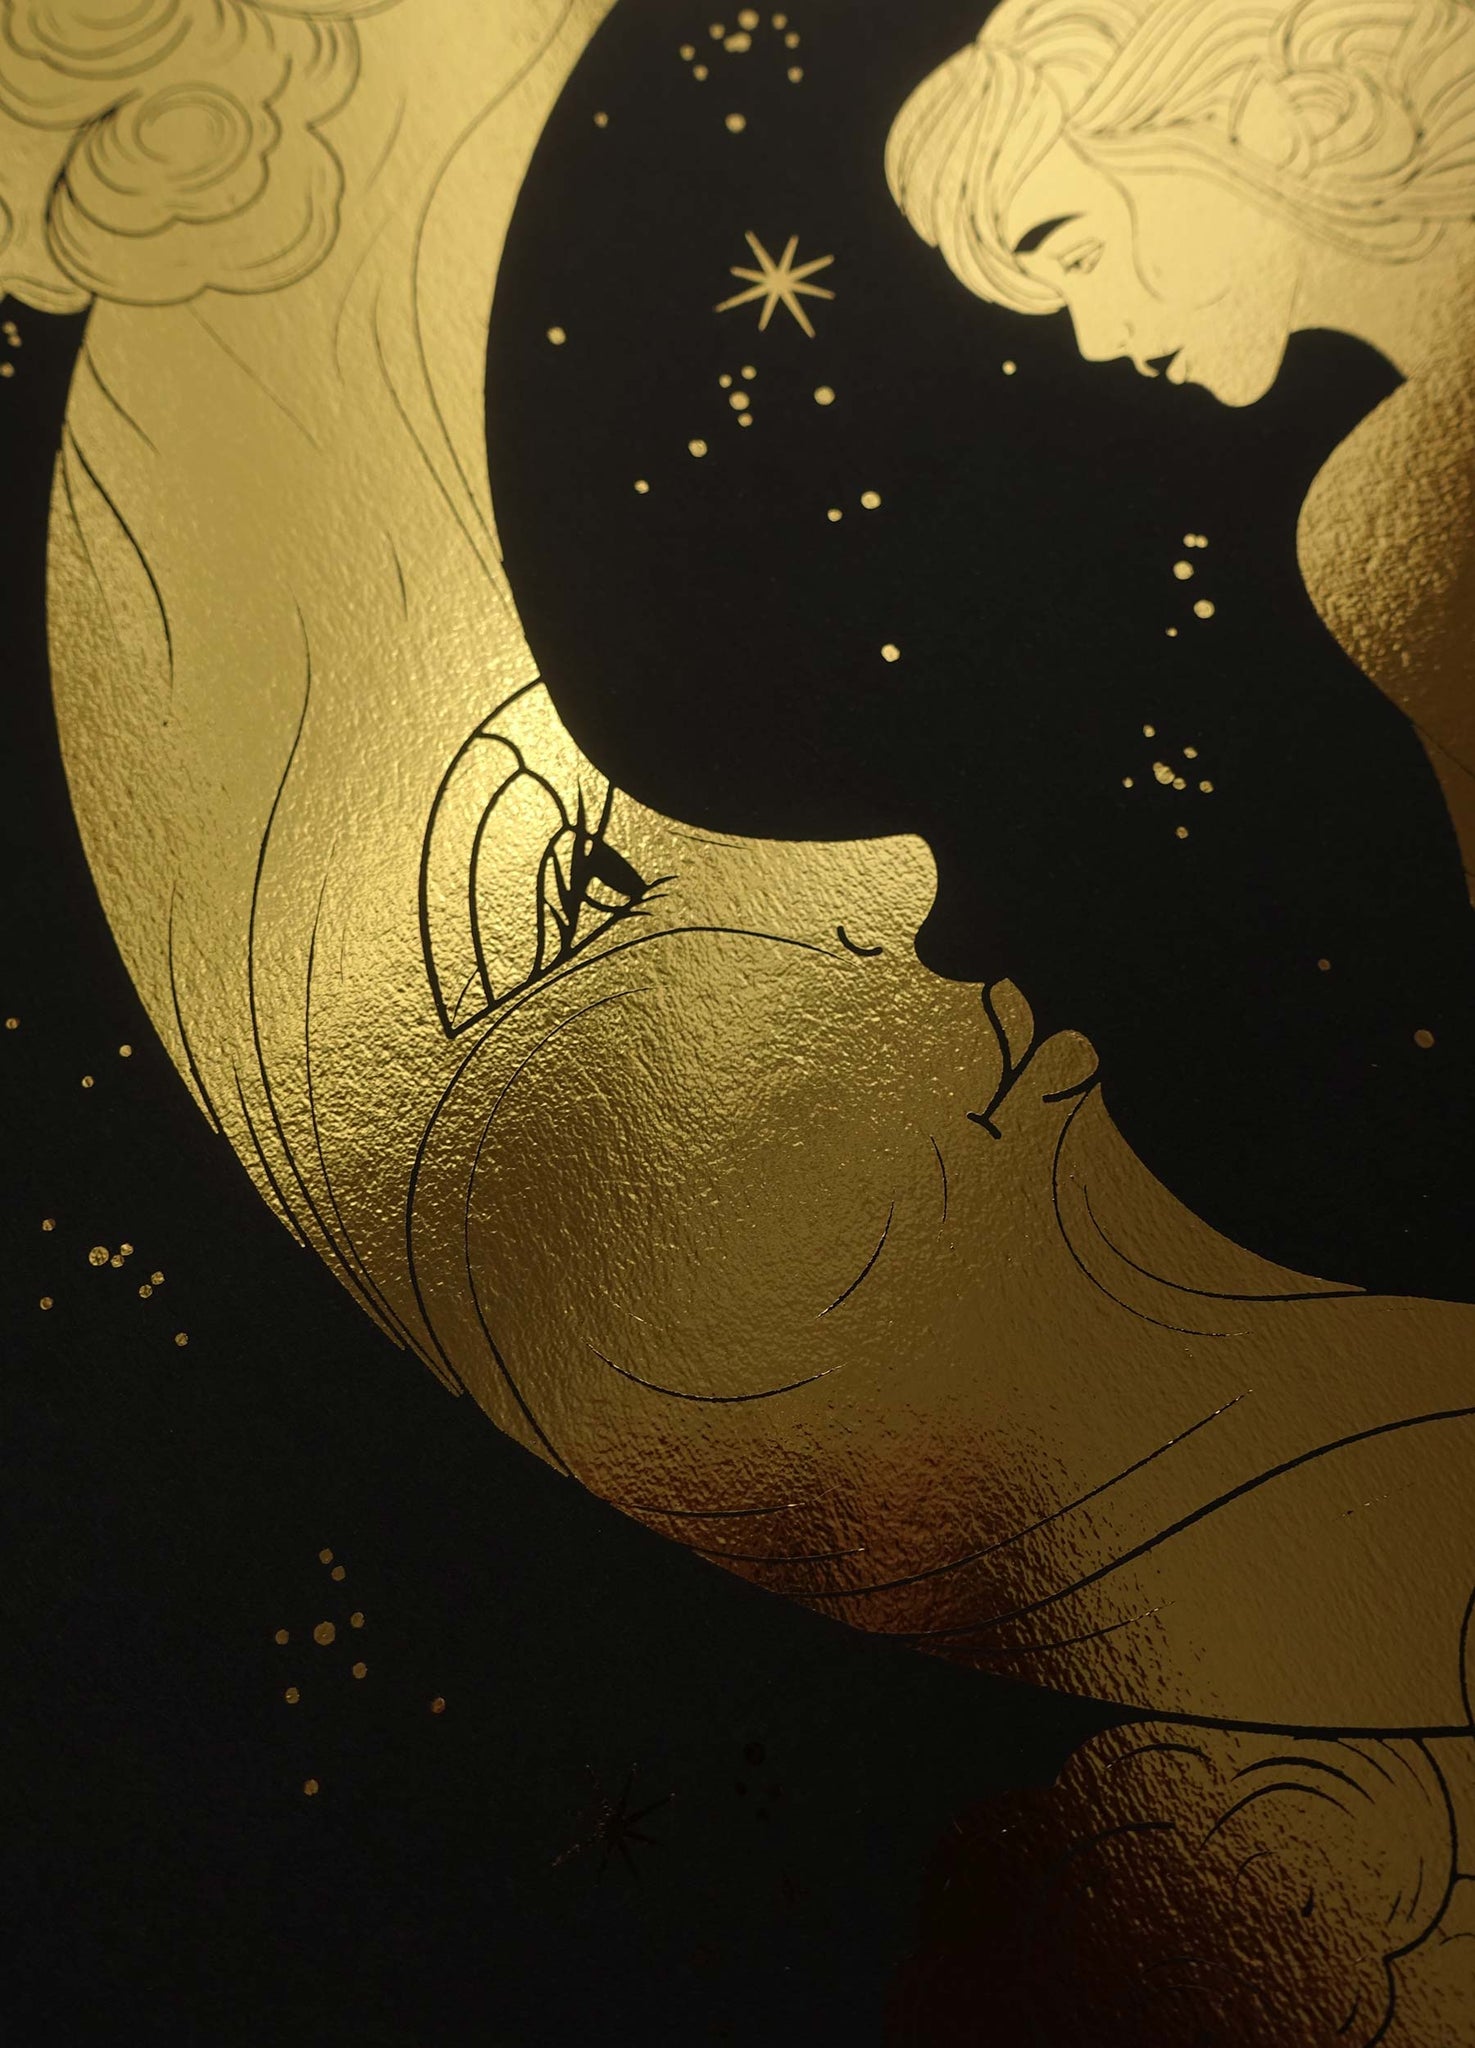 Moon Goddess gold foil art print on black paper by Cocorrina & Co Shop and Design Studio